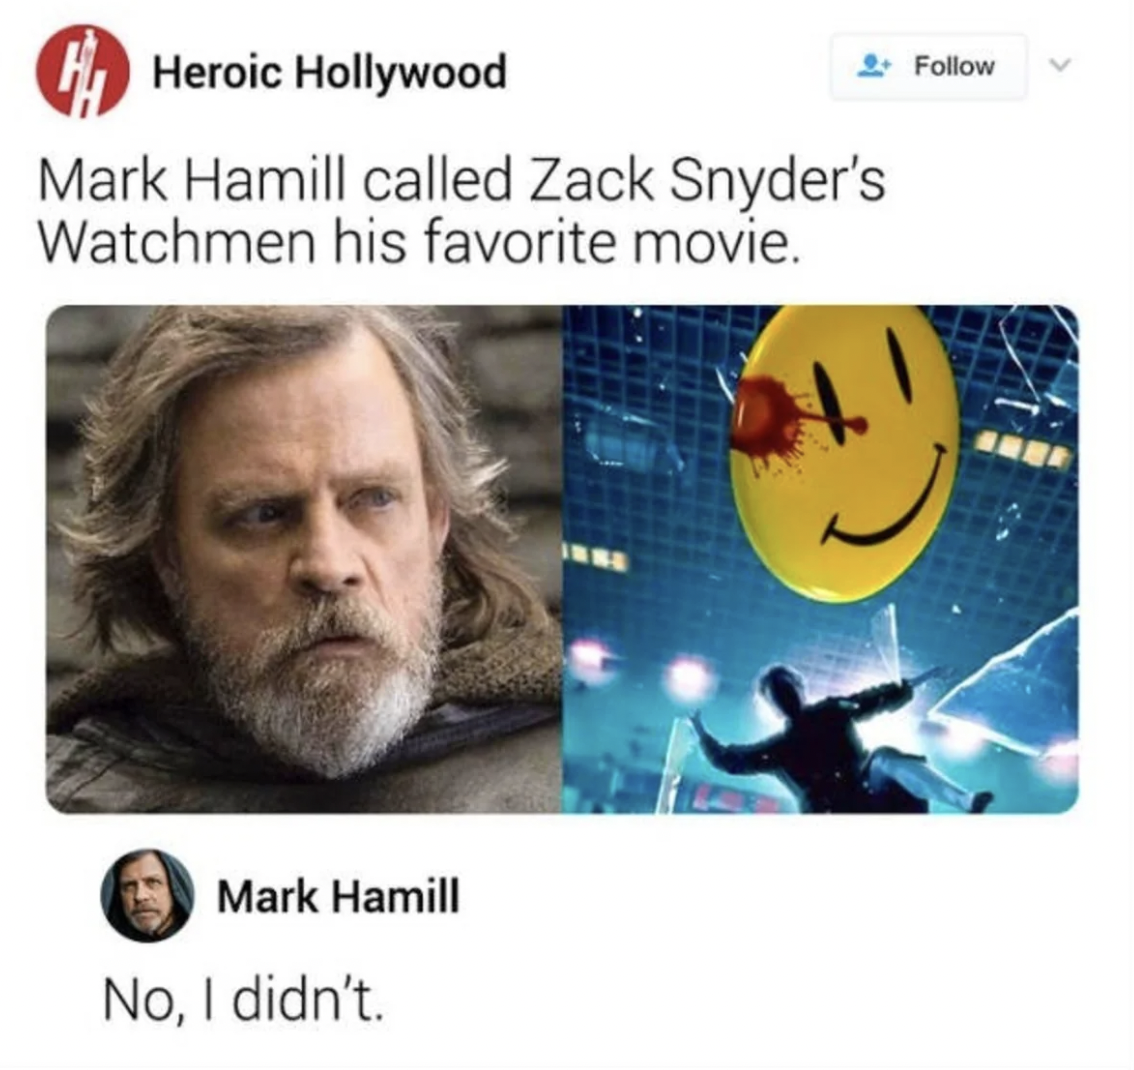 human behavior - Heroic Hollywood Mark Hamill called Zack Snyder's Watchmen his favorite movie. Mark Hamill 2. No, I didn't.